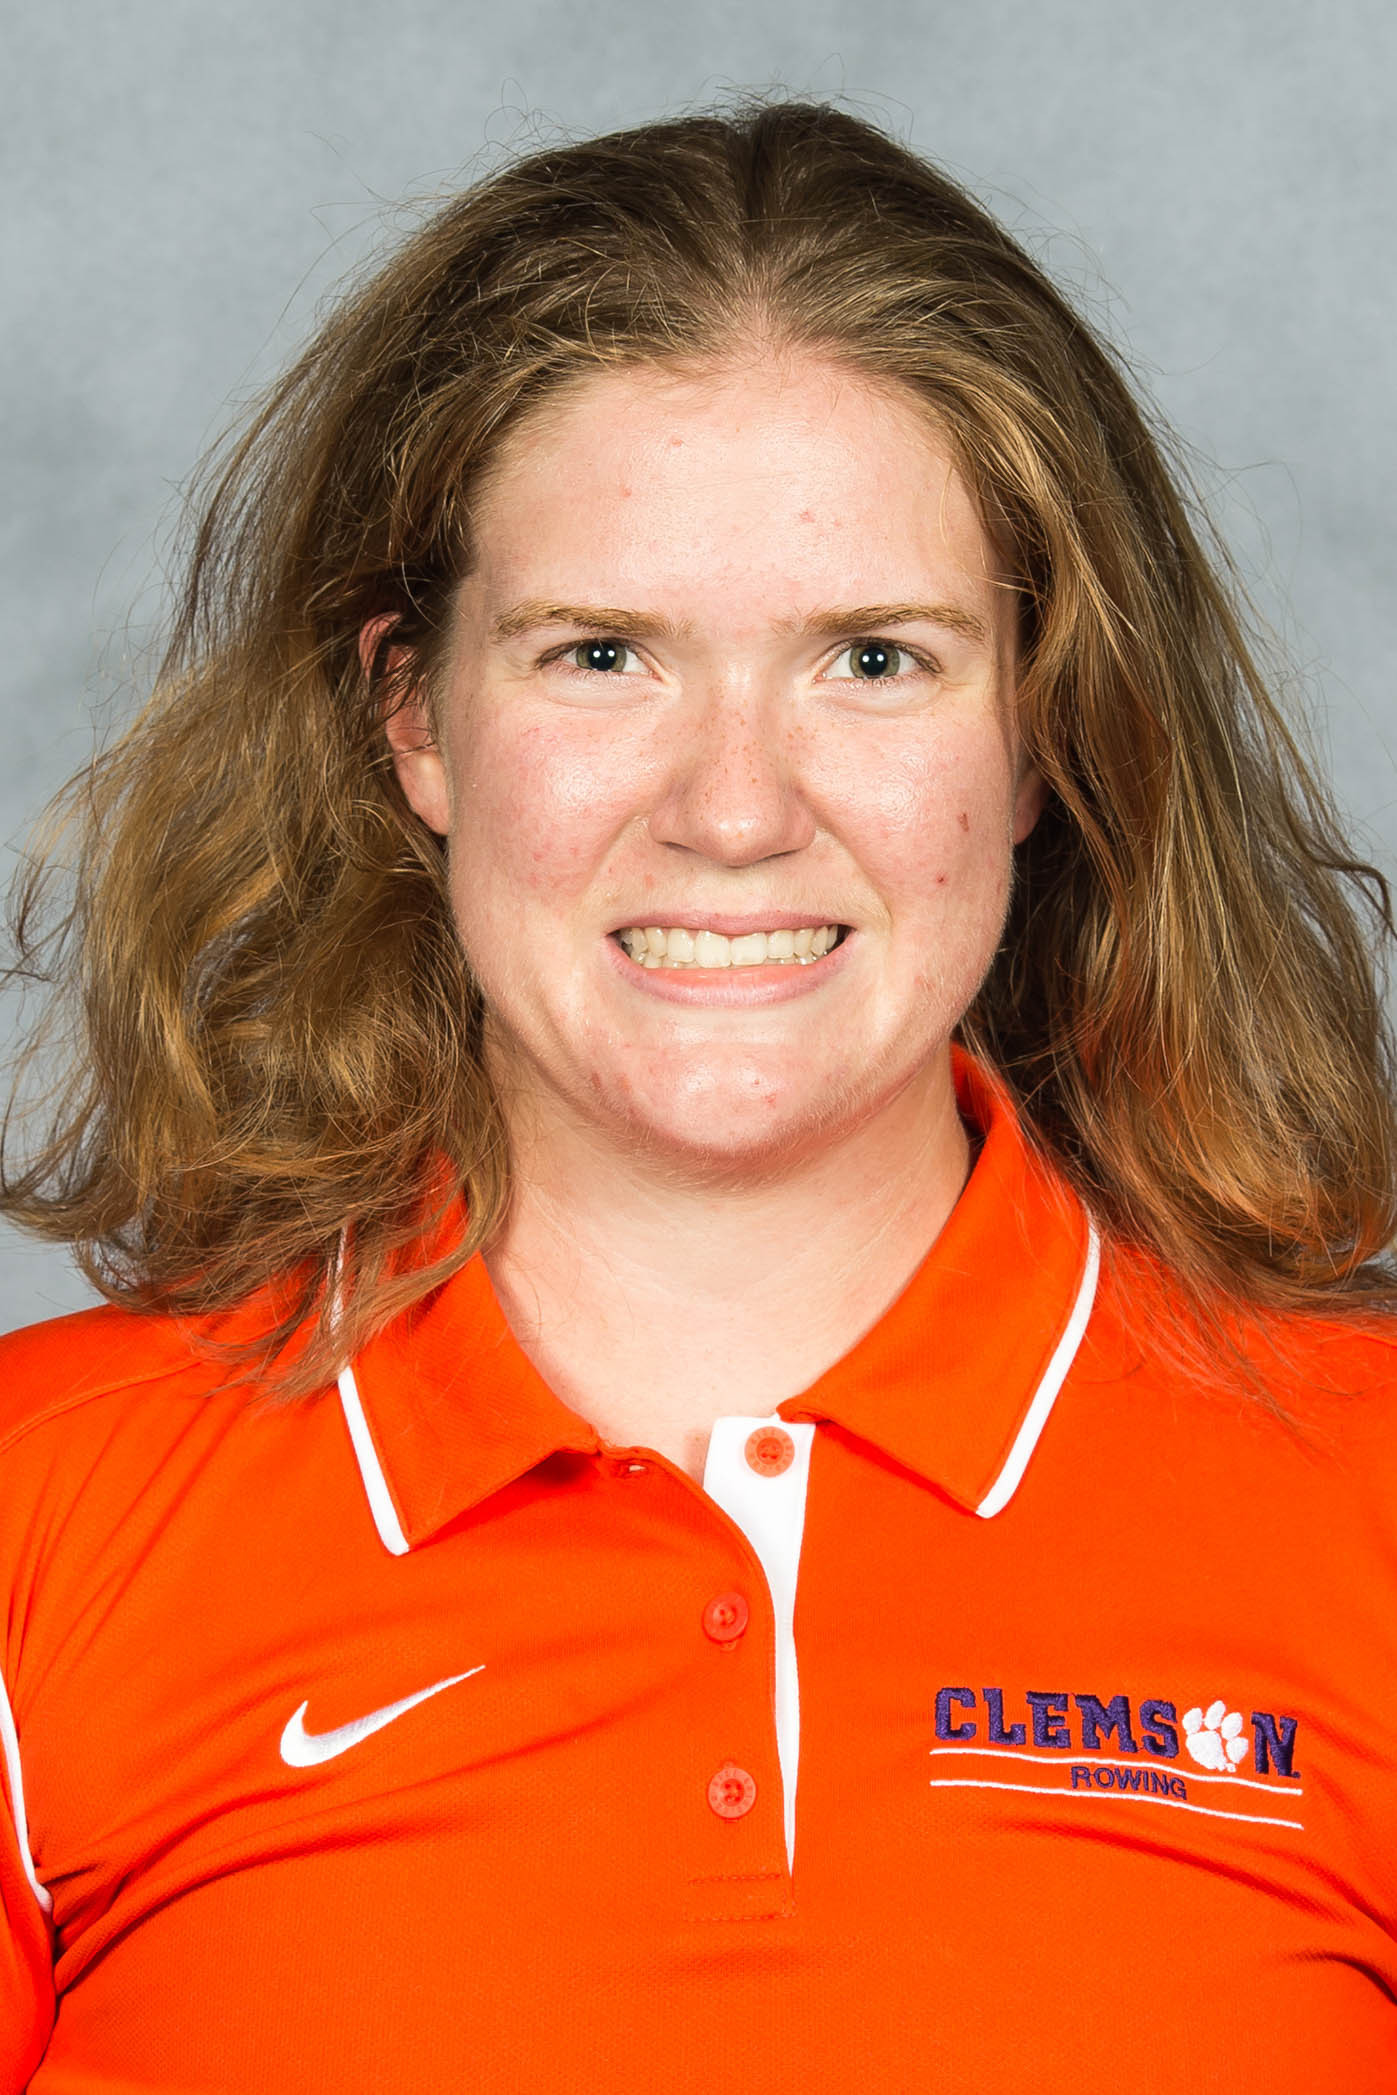 Hannah Maeser - Rowing - Clemson University Athletics